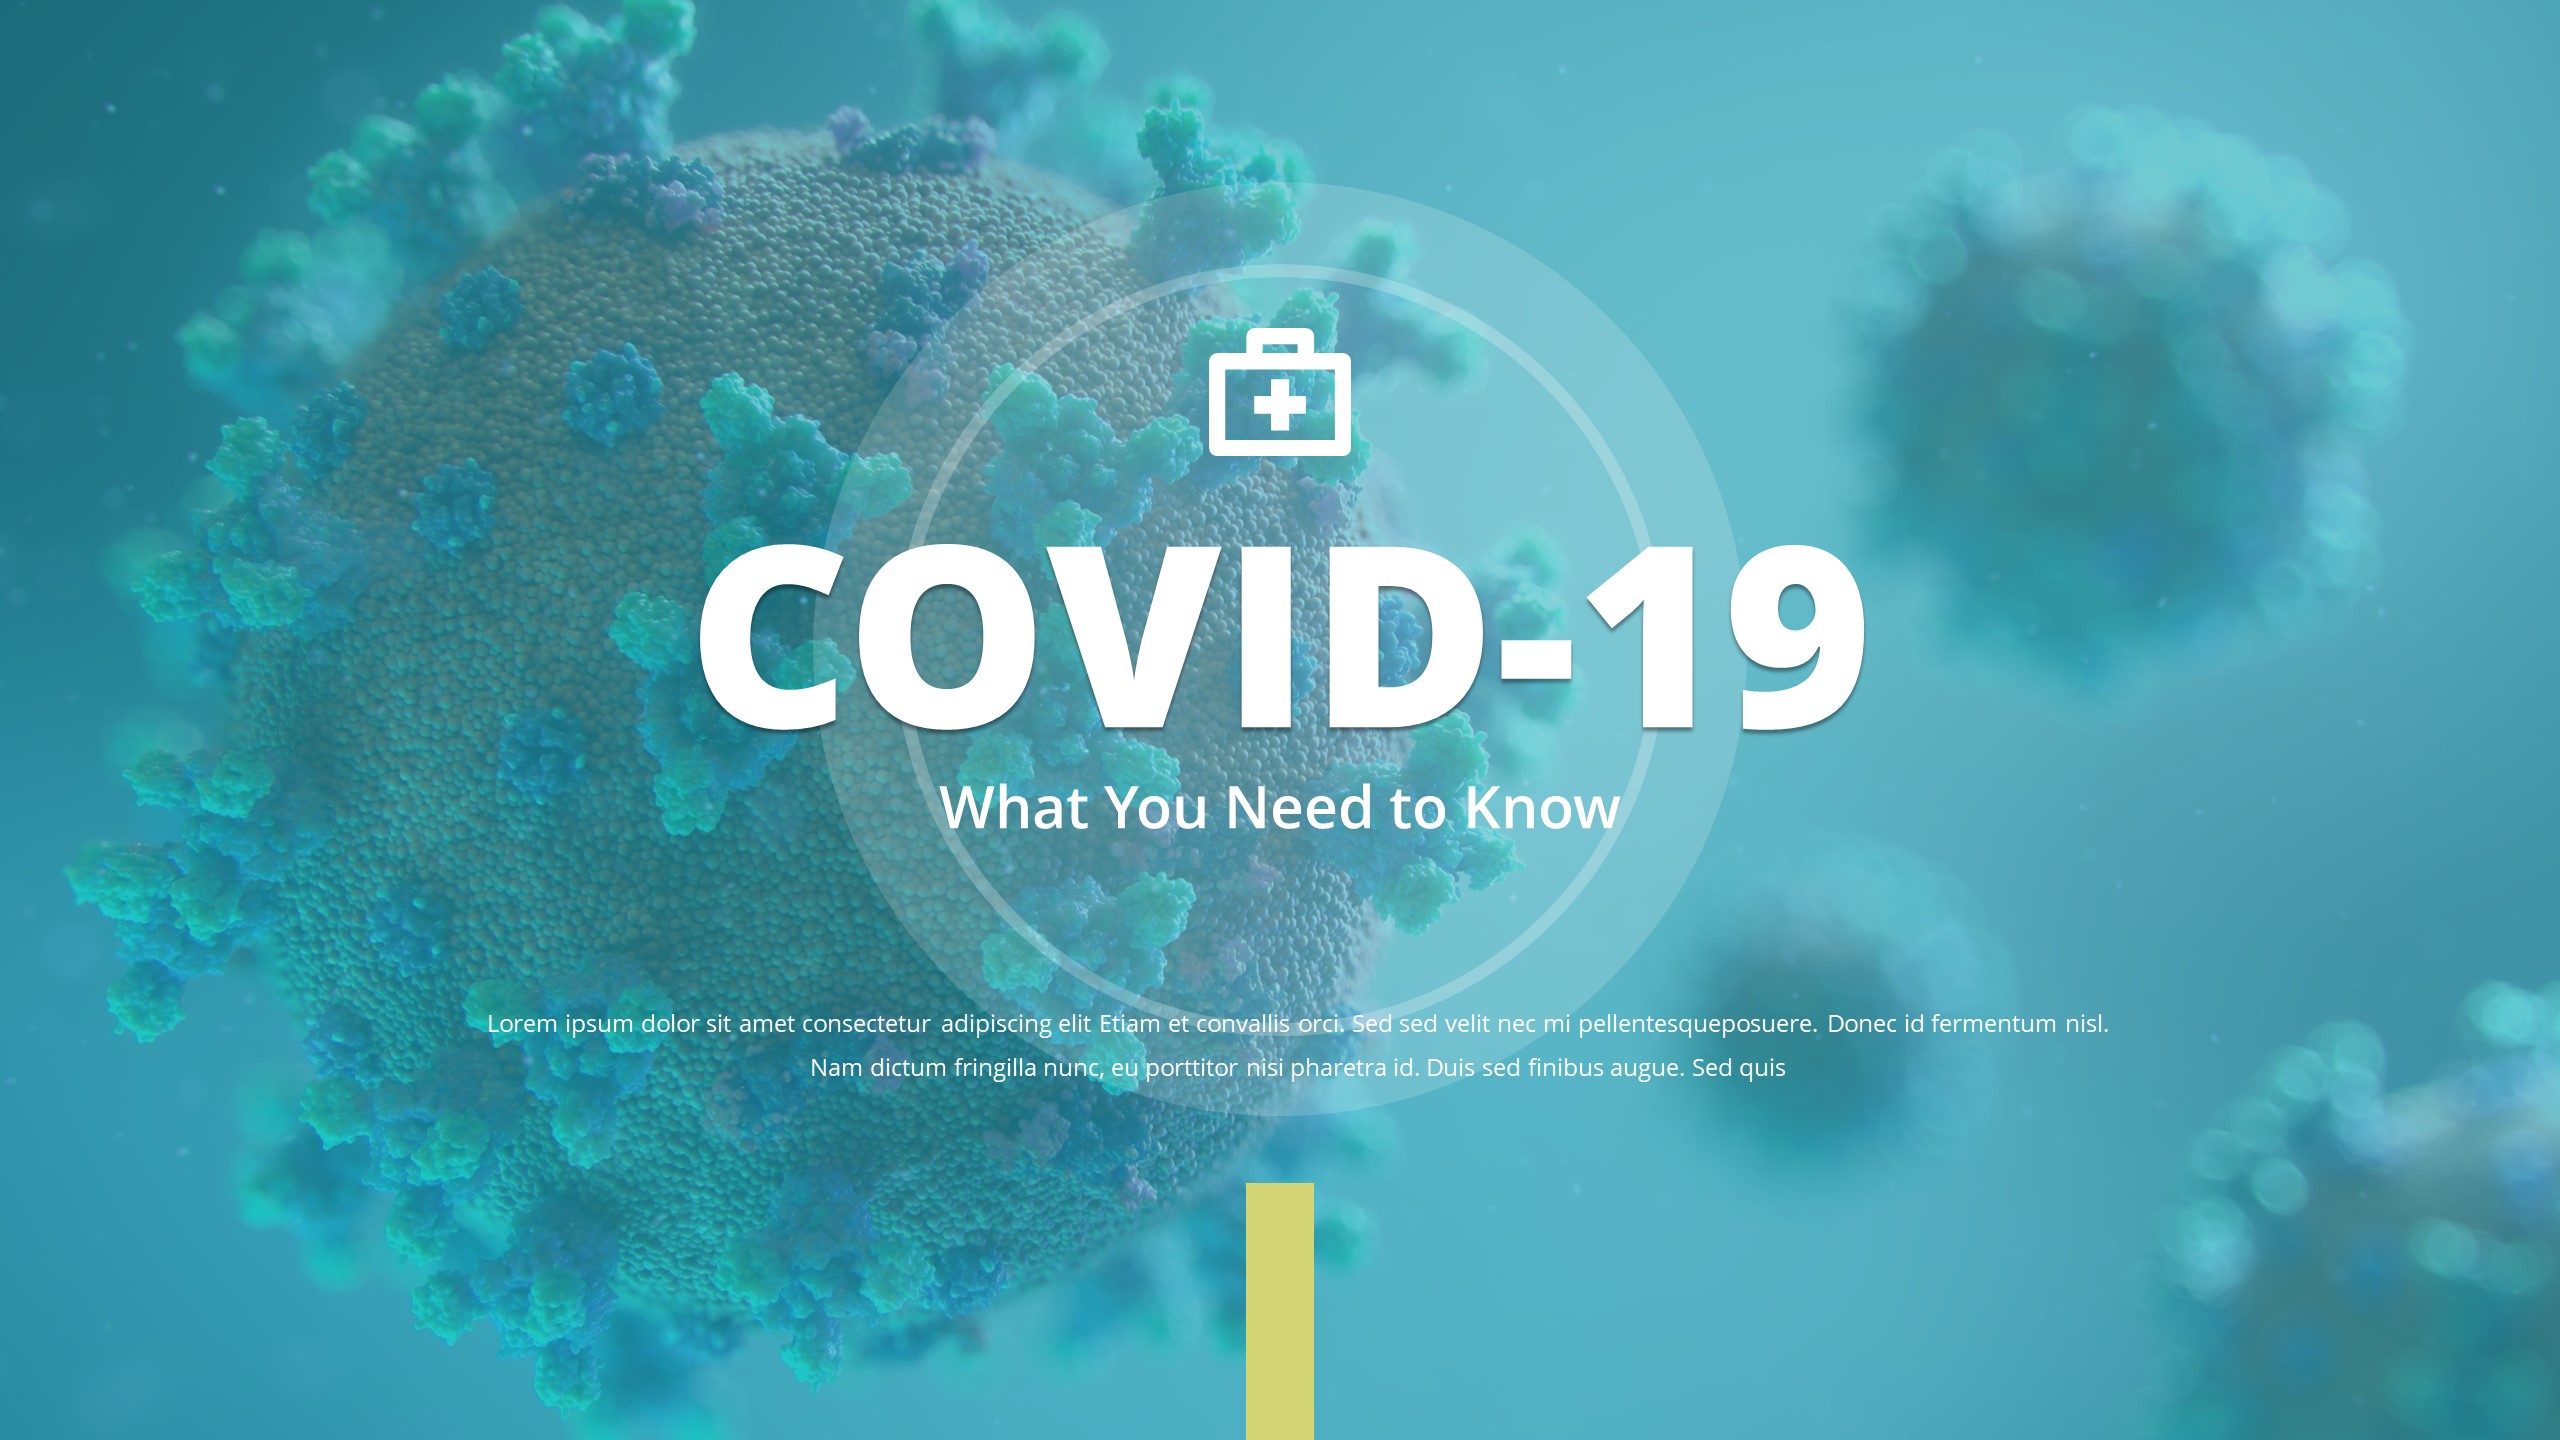 Covid 19 Coronavirus Power Point Presentation Template By Augtapir